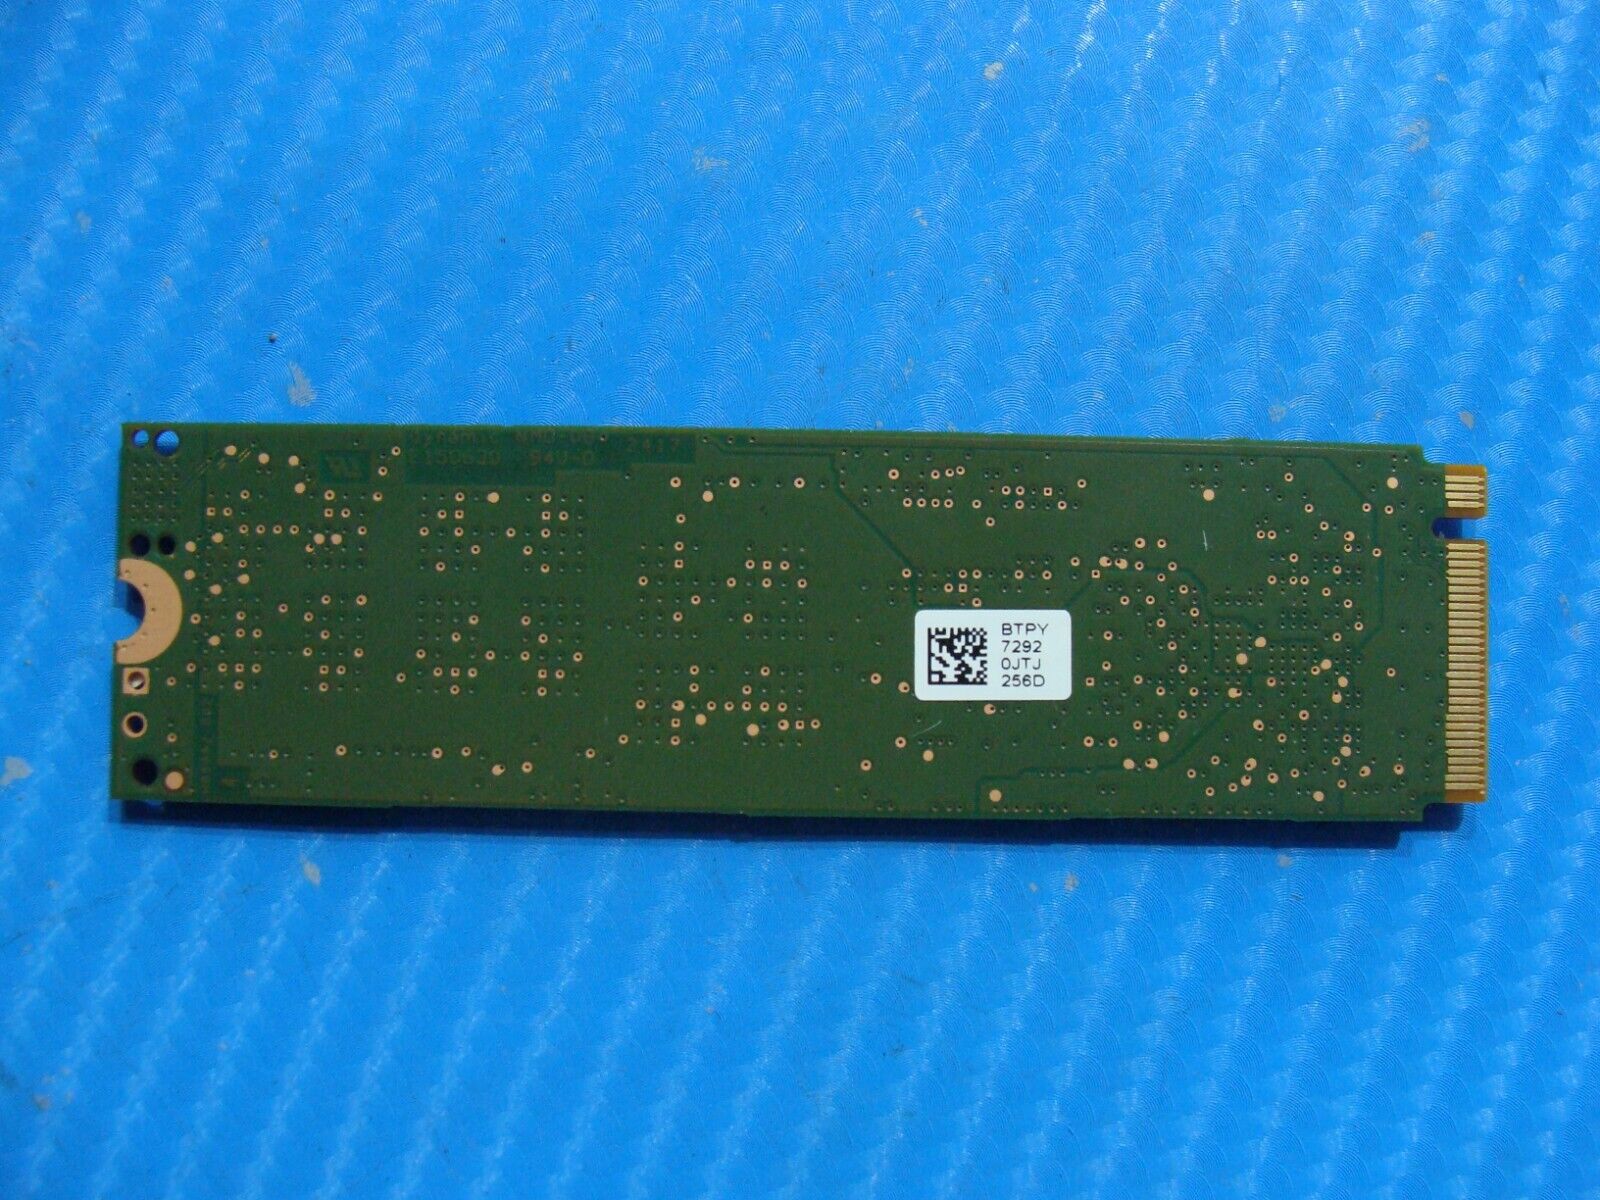 Lenovo 720s-14IKB Intel 256GB NVMe M.2 SSD Solid State Drive SSDPEKKW256G7